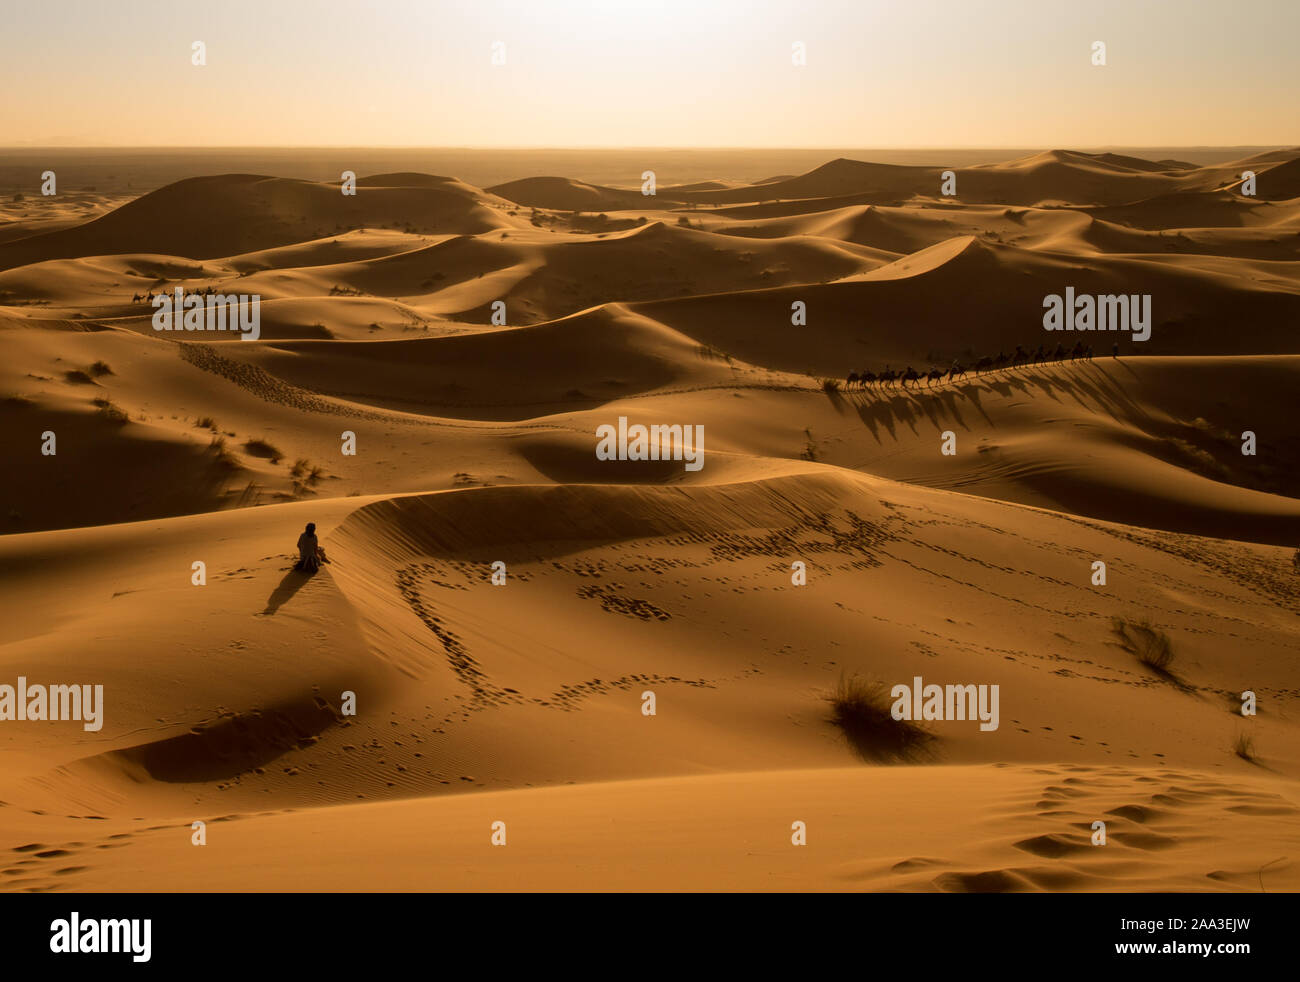 Sahara, Kamelritt, Sonnenuntergang, camel Caravan Stockfoto